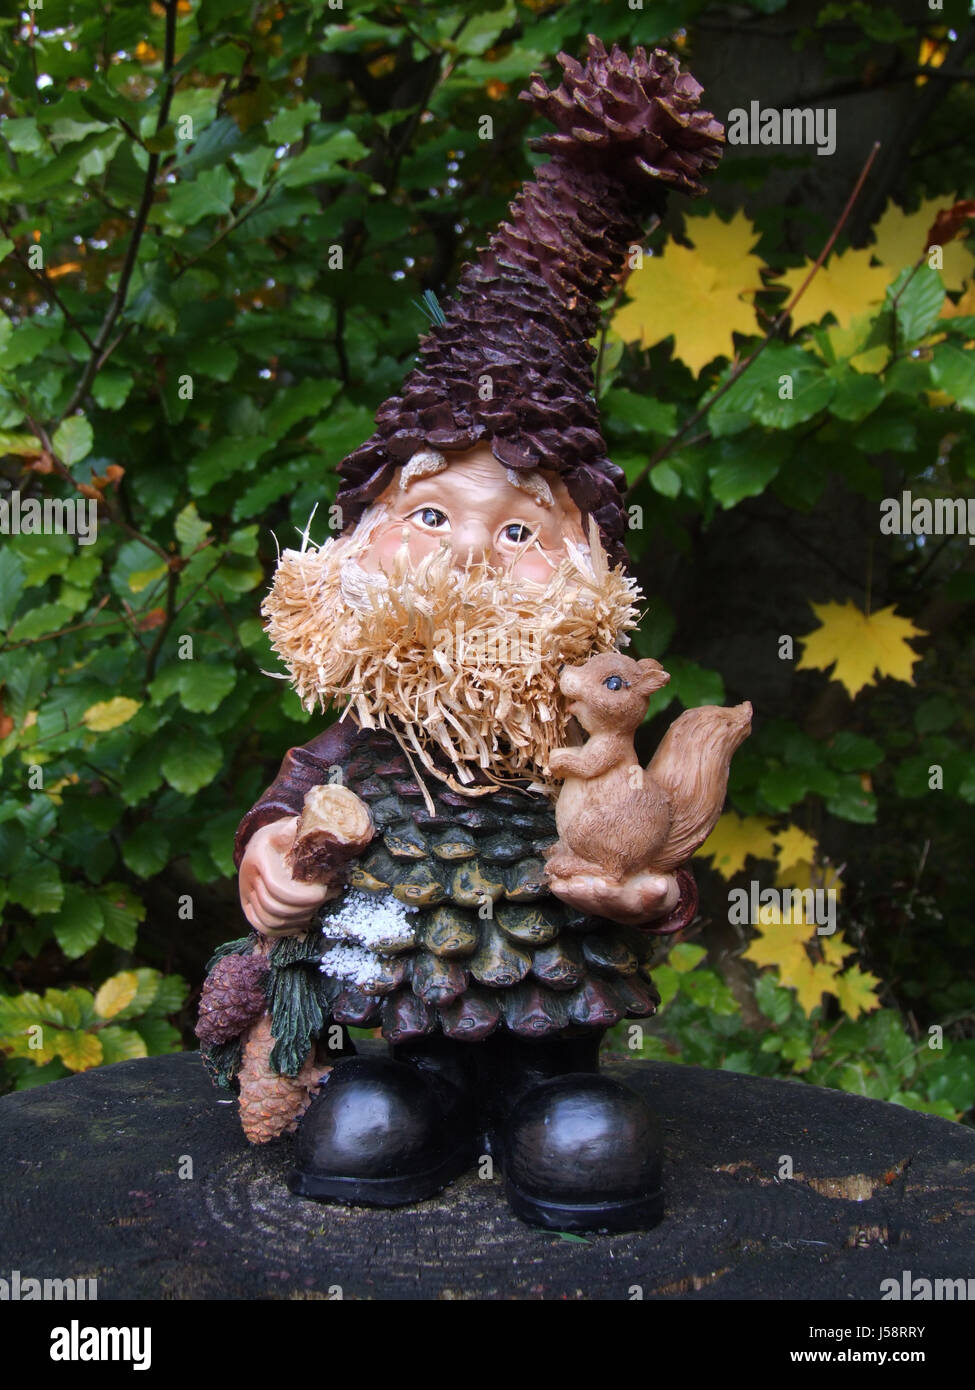 Enanos de jardín gnome zierfigur originalmente wenzel gartenfigur gartenfiguren dehner Foto de stock